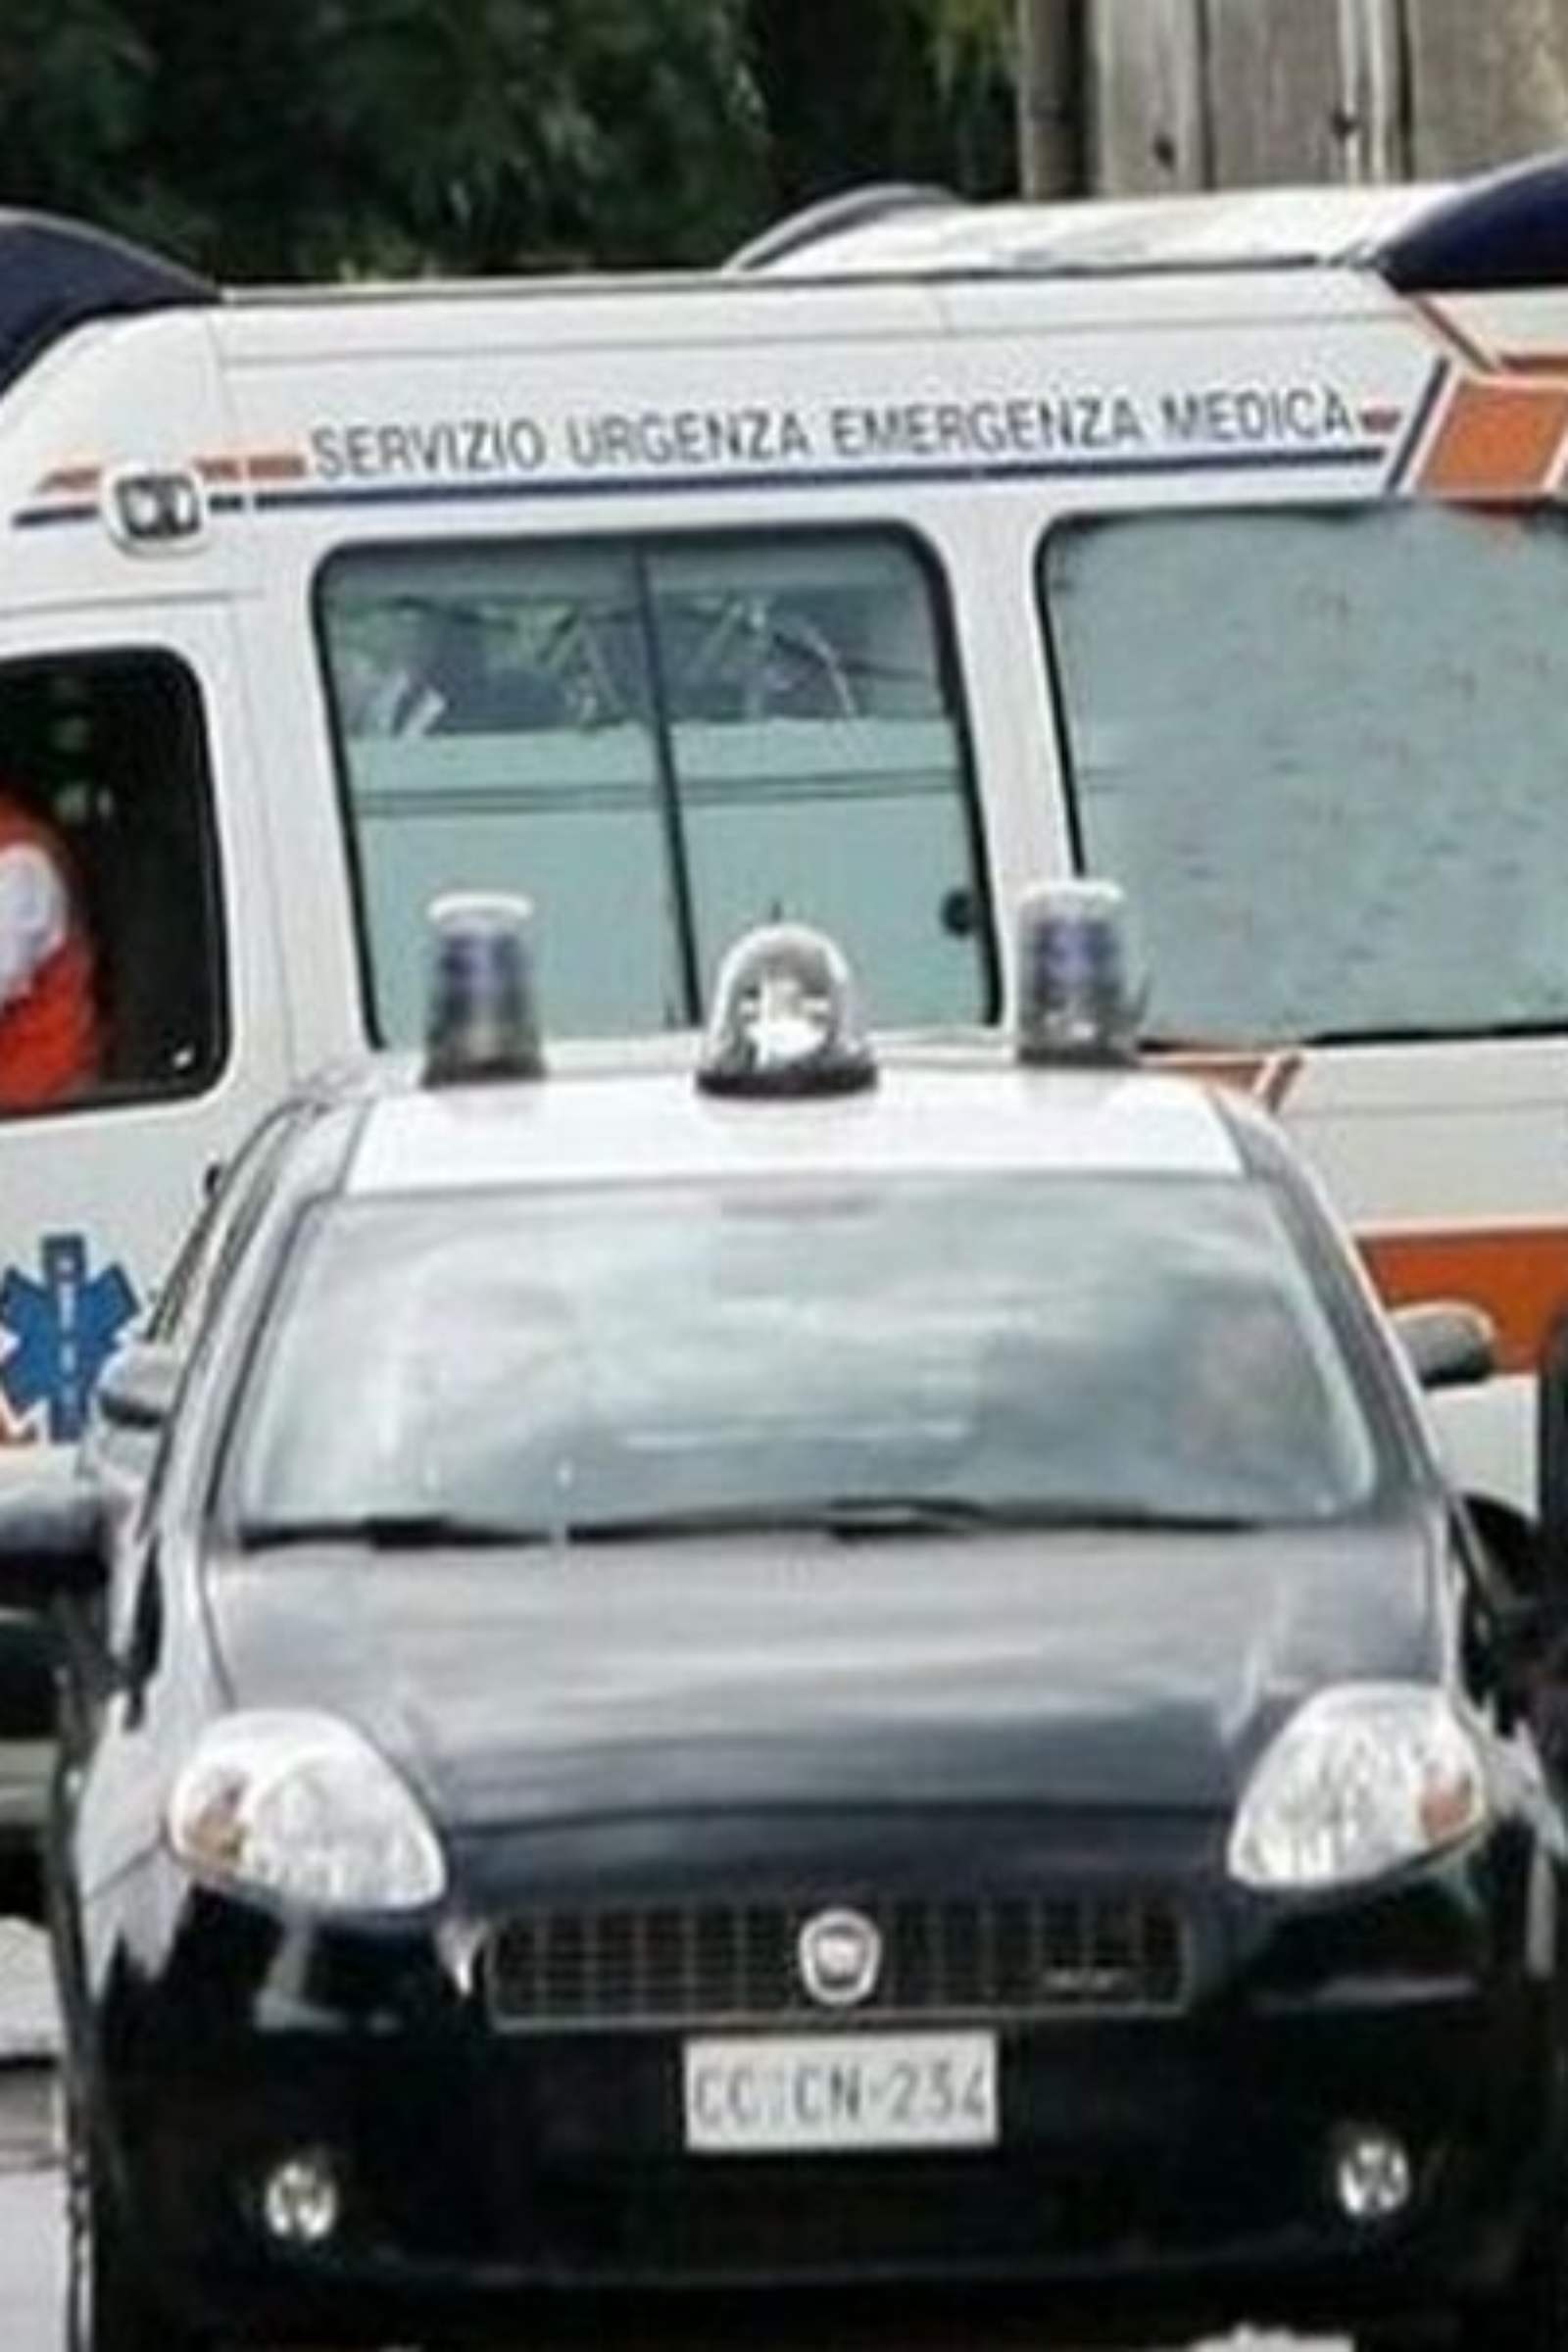 Carabinieri ambulanza foto